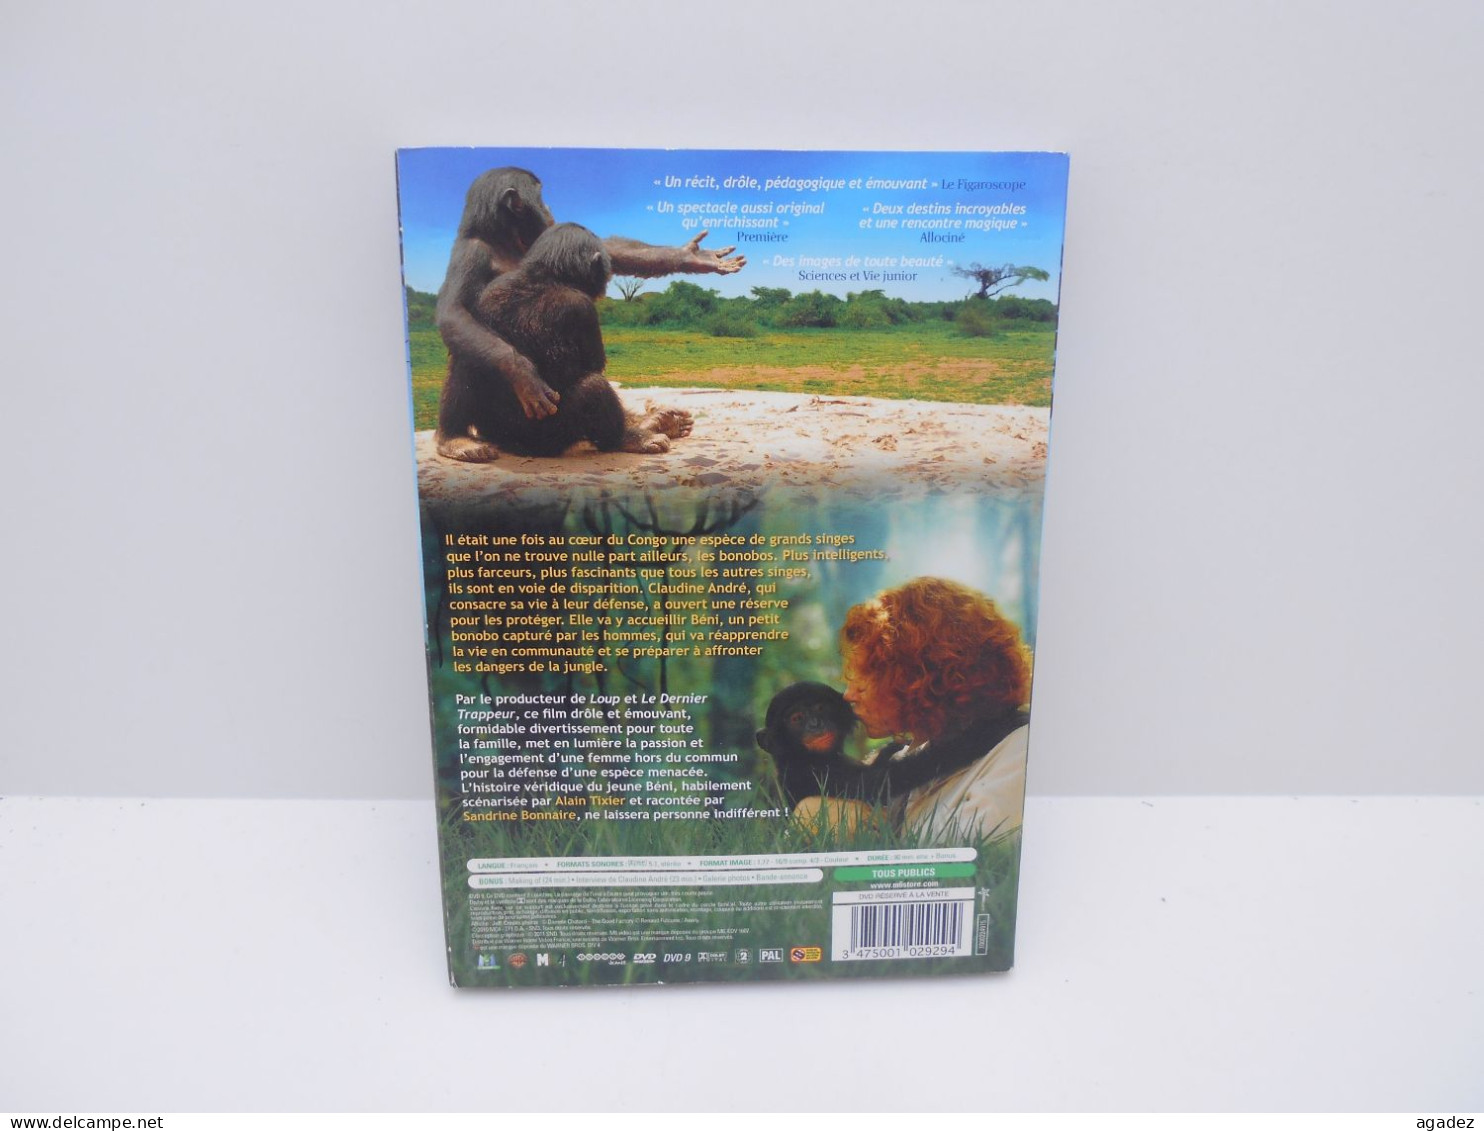 DVD Film Bonobos Alain Tixier  (singes) - Documentaires